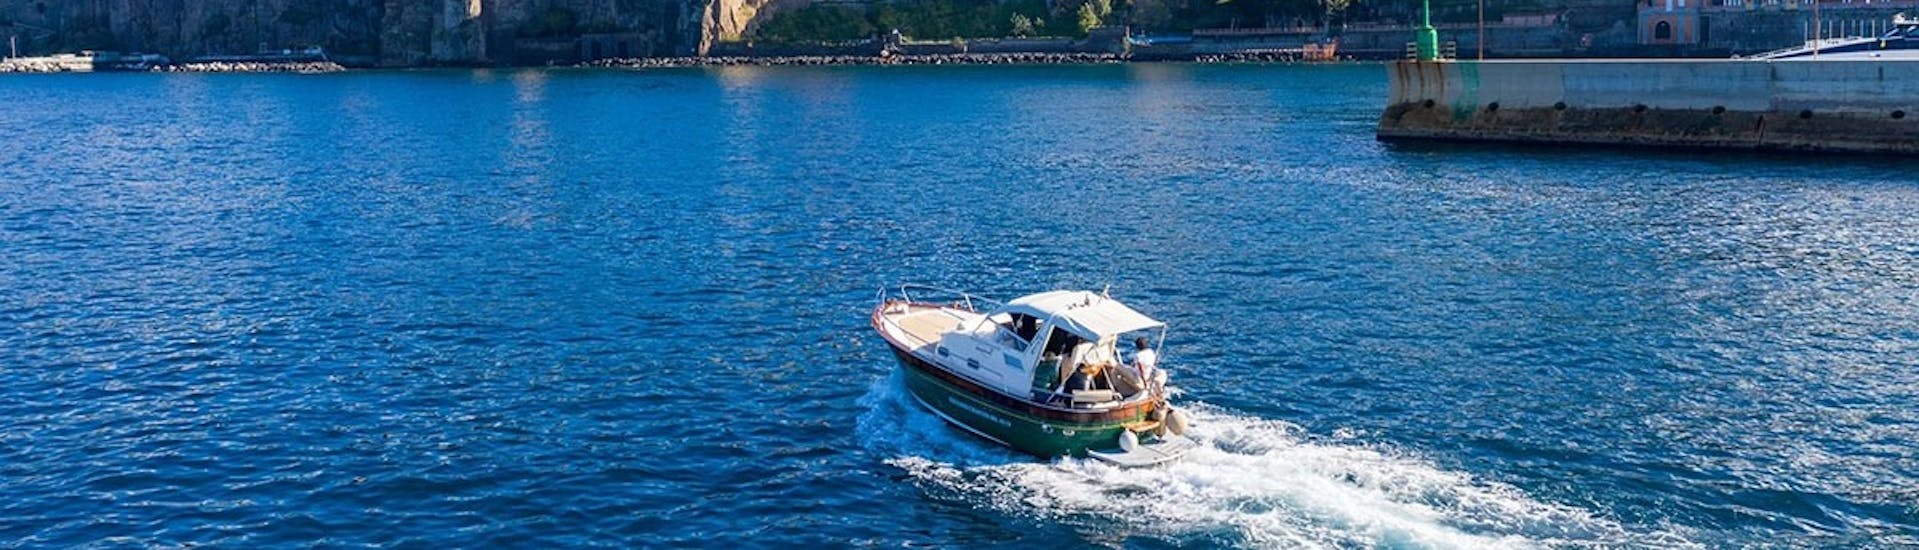 Giuliani Charter Sorrento barco en aguas abiertas durante el Paseo en Barco por la costa de Sorrento con Degustación de Limoncello.